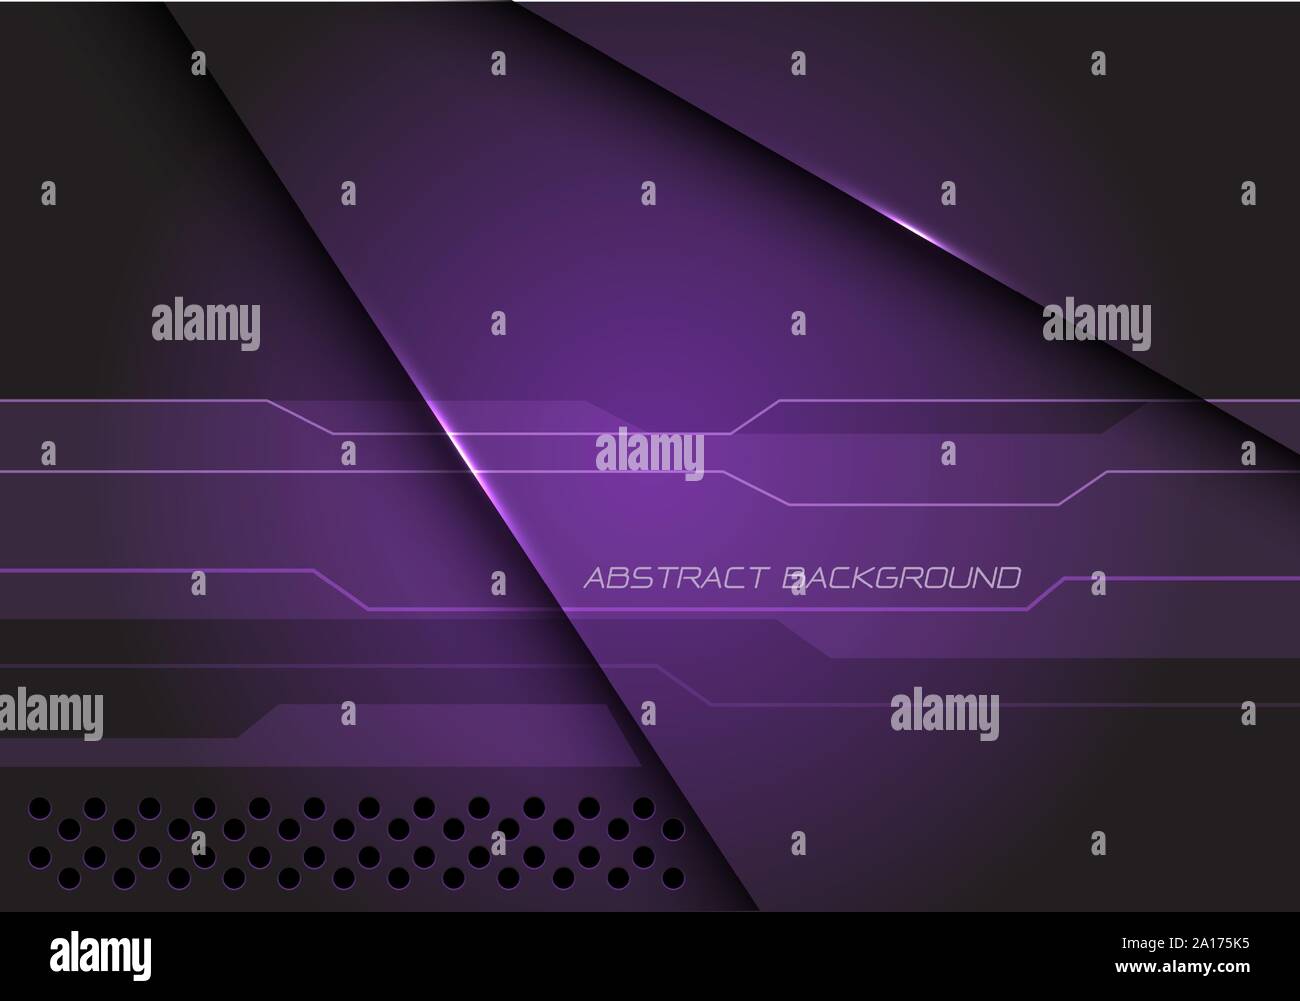 Abstract purple metallic cyber chevauchement technologie futuriste moderne design background vector illustration. Illustration de Vecteur